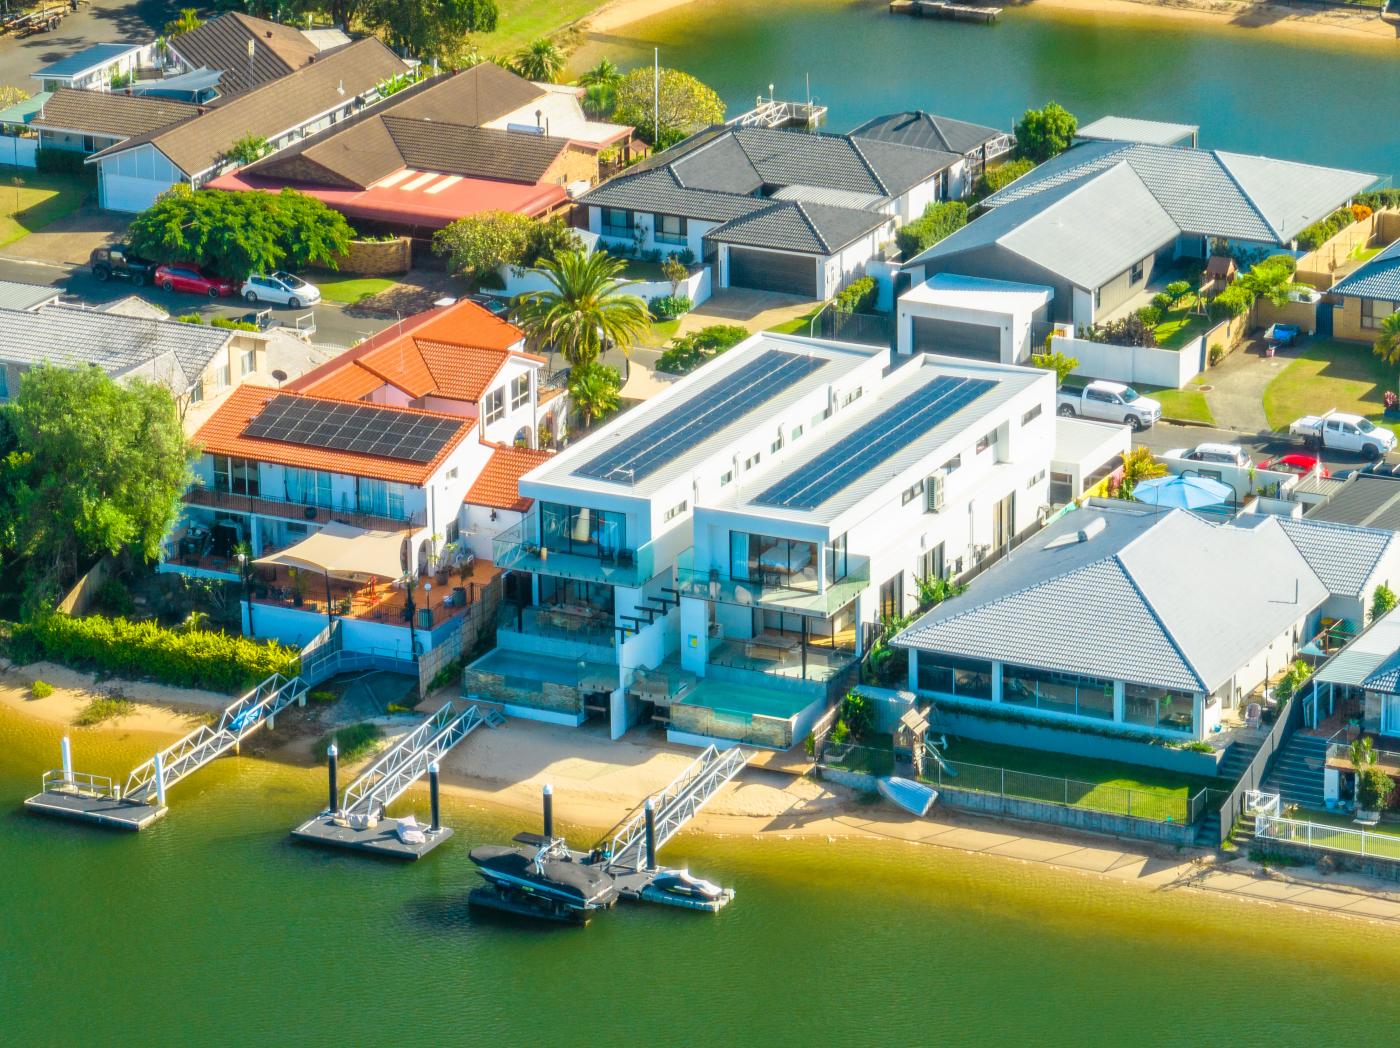 M-Motion Real Estate Agency, 11B Yunga Court Broadbeach Waters, QLD, 4218, Michael Mahon, Lauren Mahon, Best Real Estate Agent Gold Coast